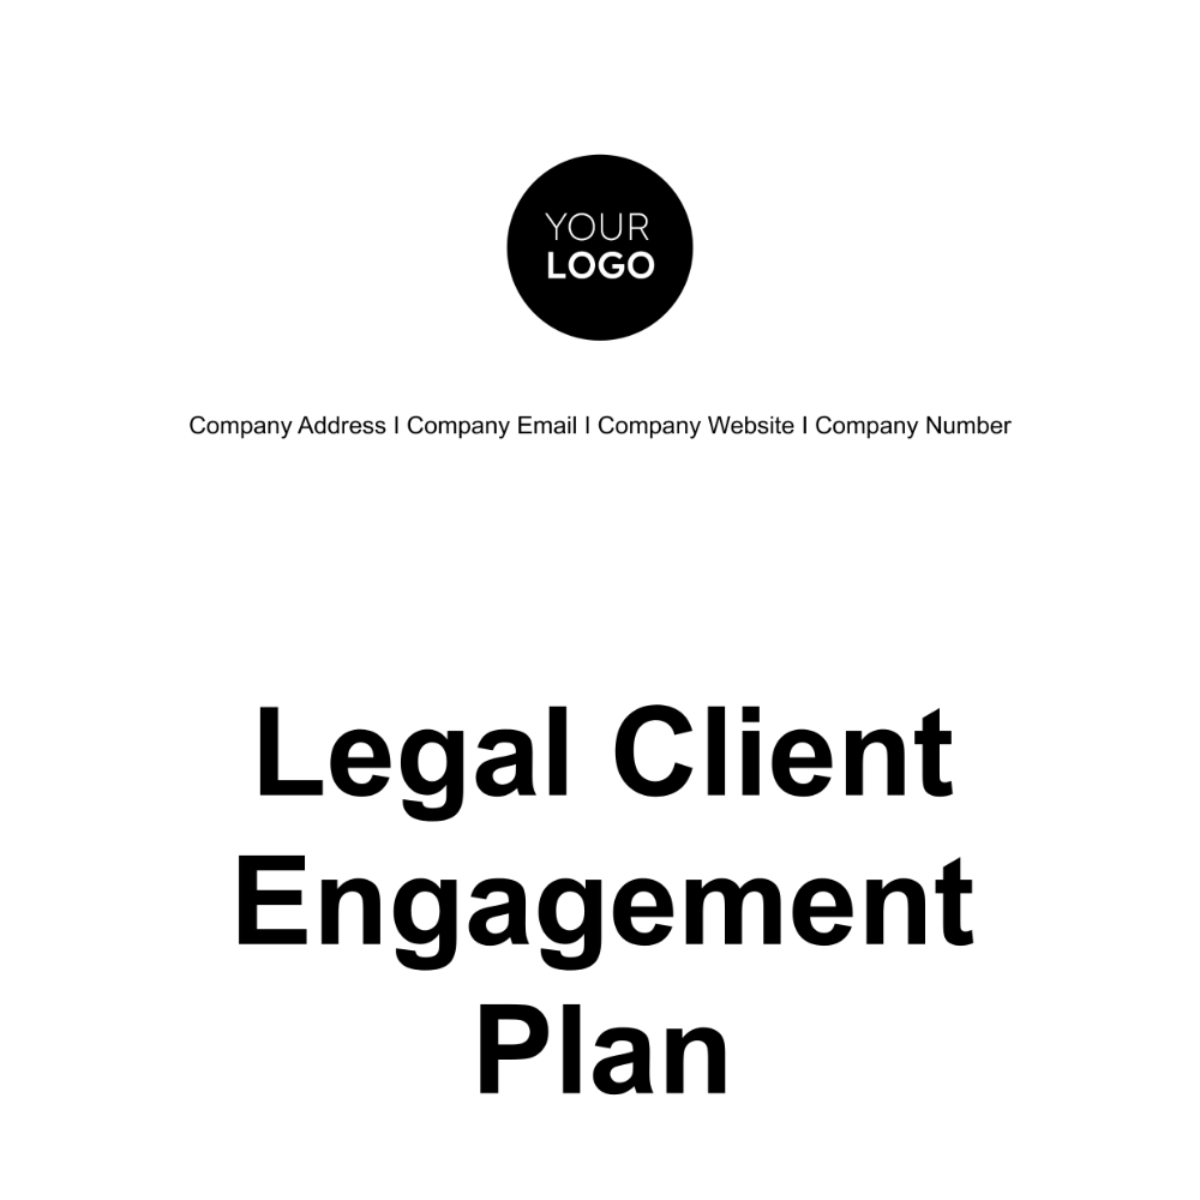 Free Legal Client Engagement Plan Template